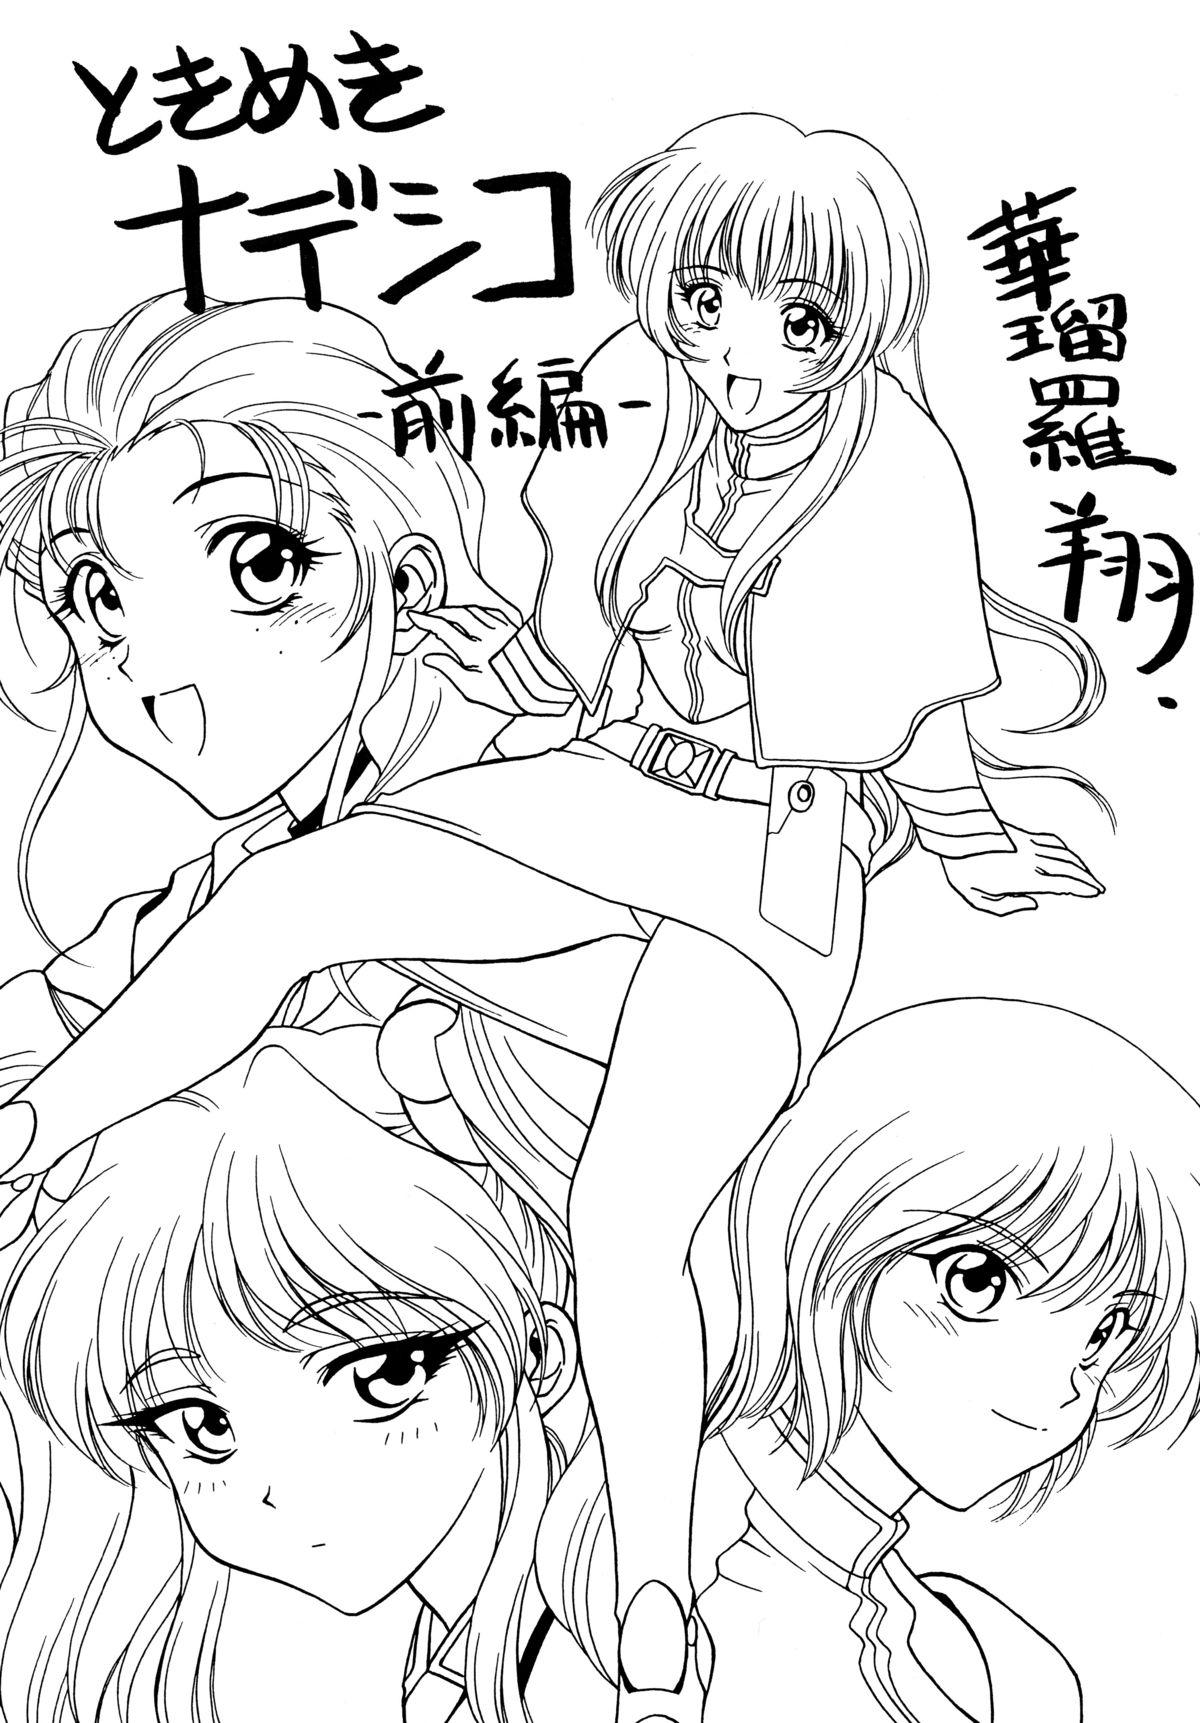 Rabo LOVE² BREATH - Sakura taisen Martian successor nadesico Tokimeki memorial Youre under arrest Funk - Page 11